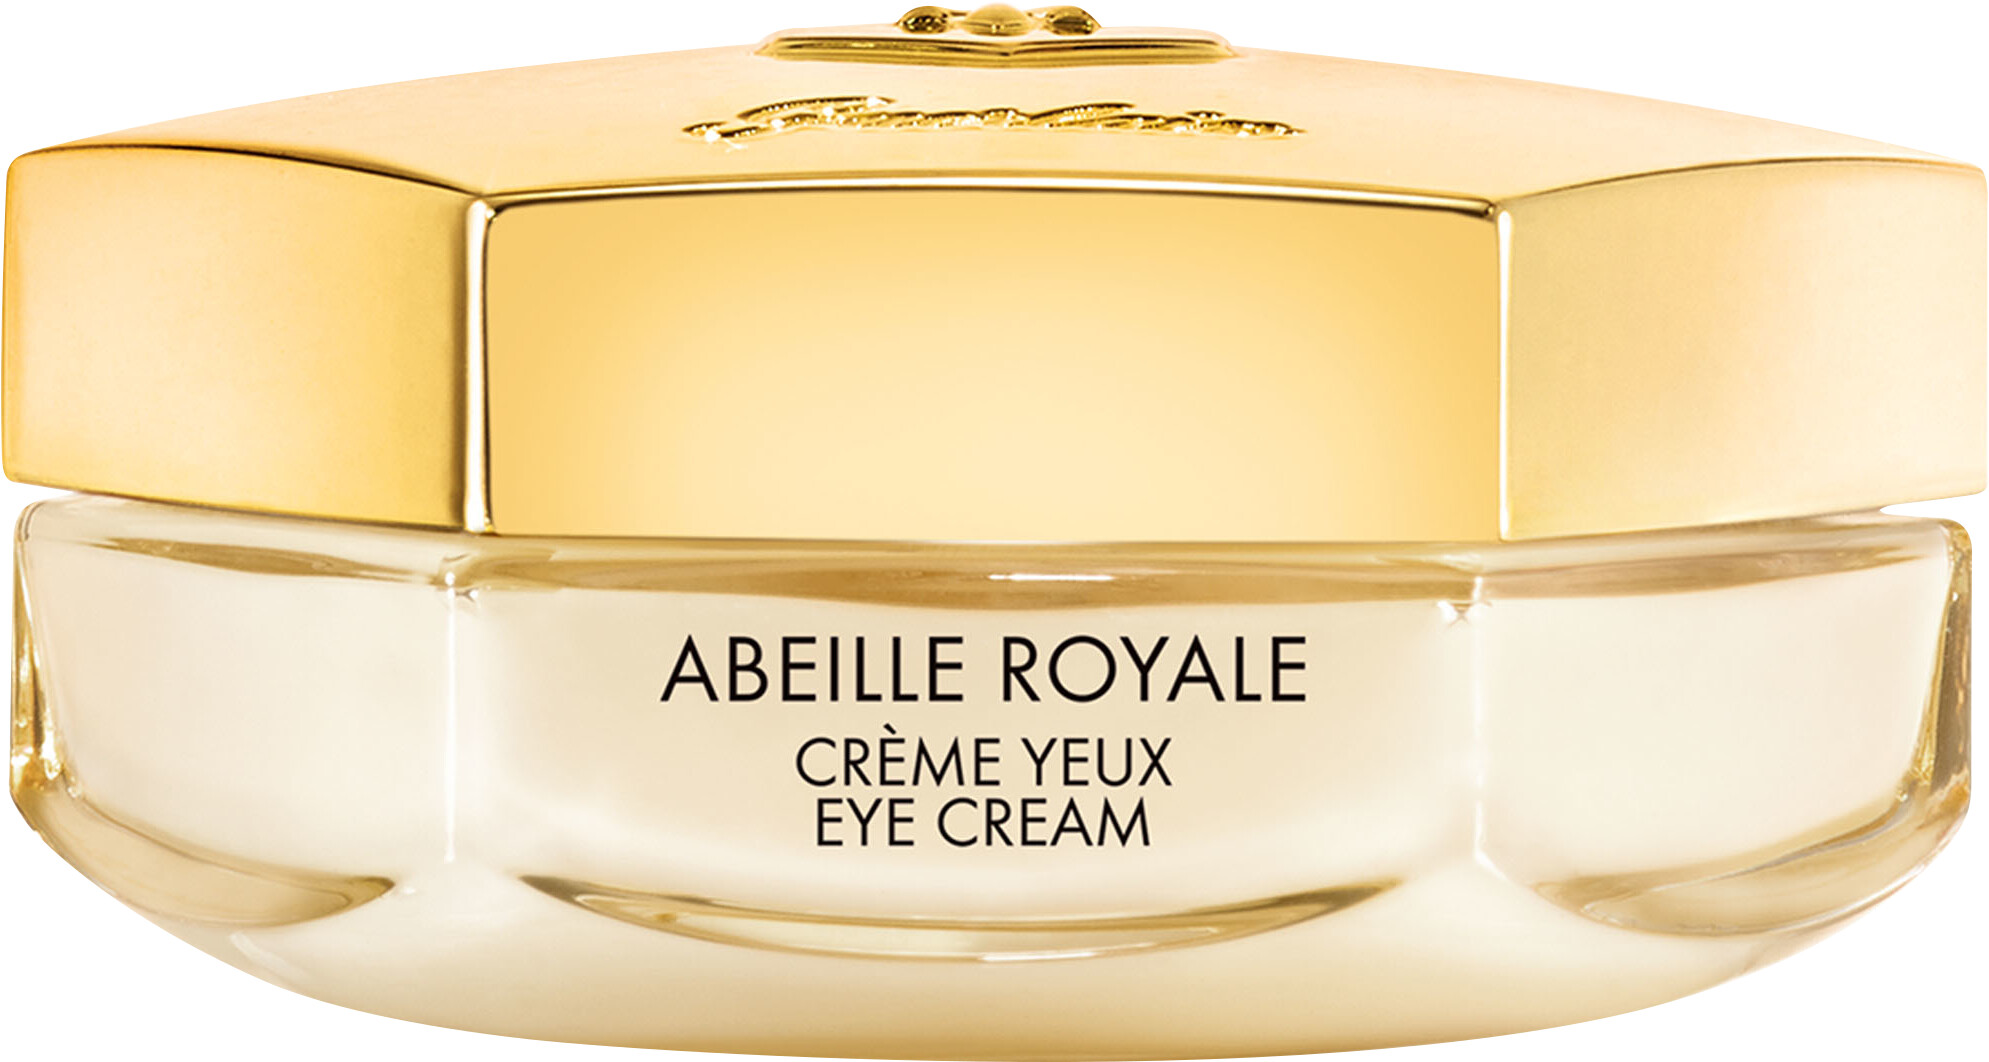 GUERLAIN Abeille Royale Eye Cream 15ml